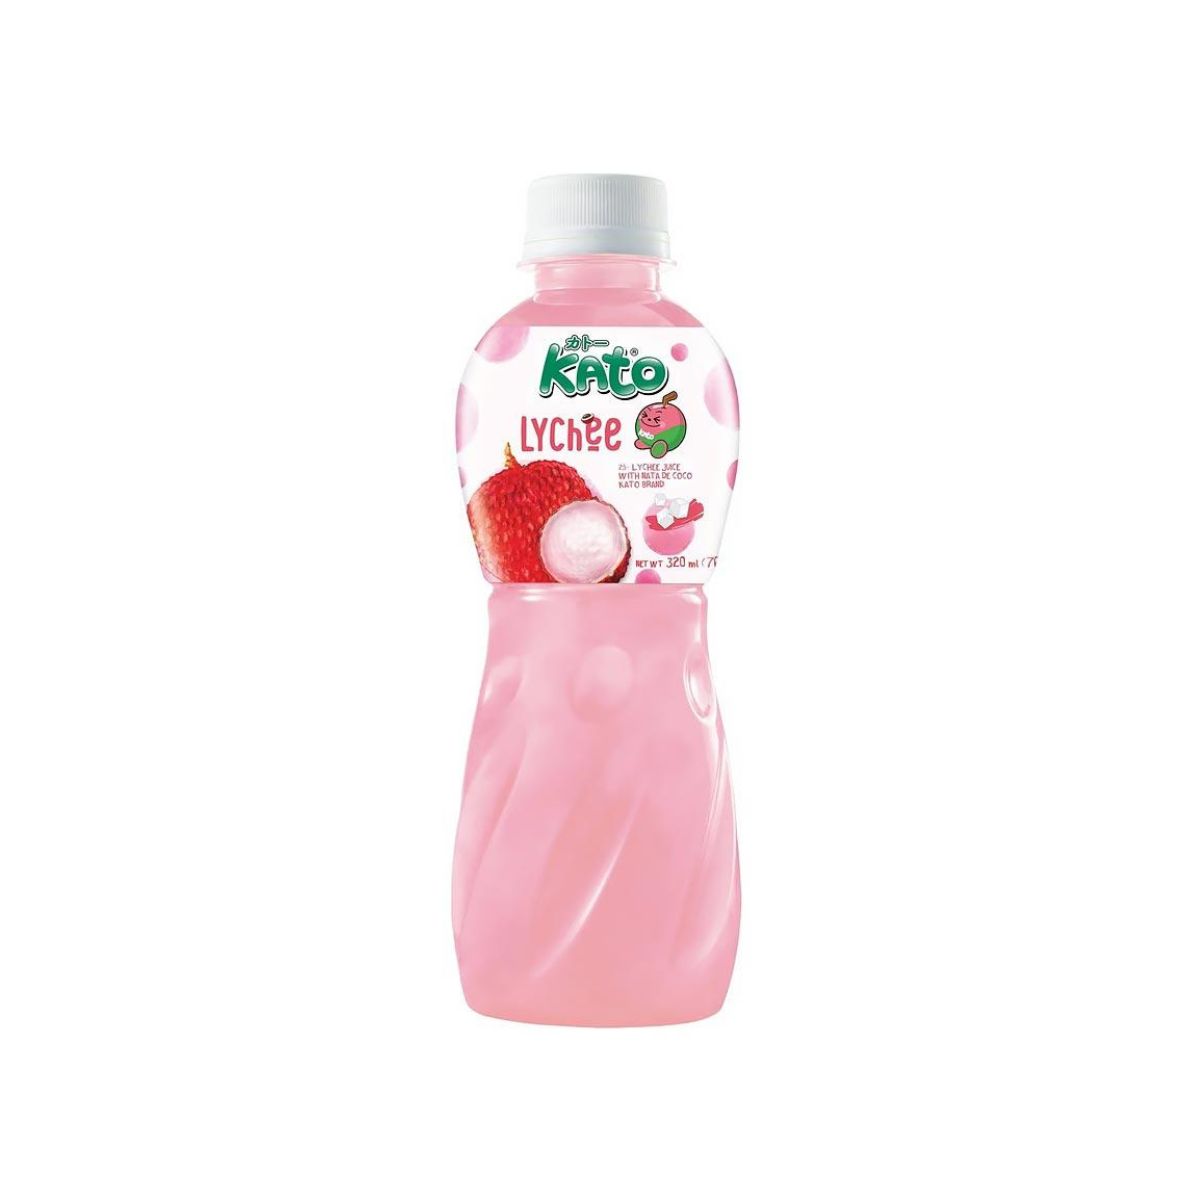 kato Lychee Juice with Nata de Coco - 320 ml